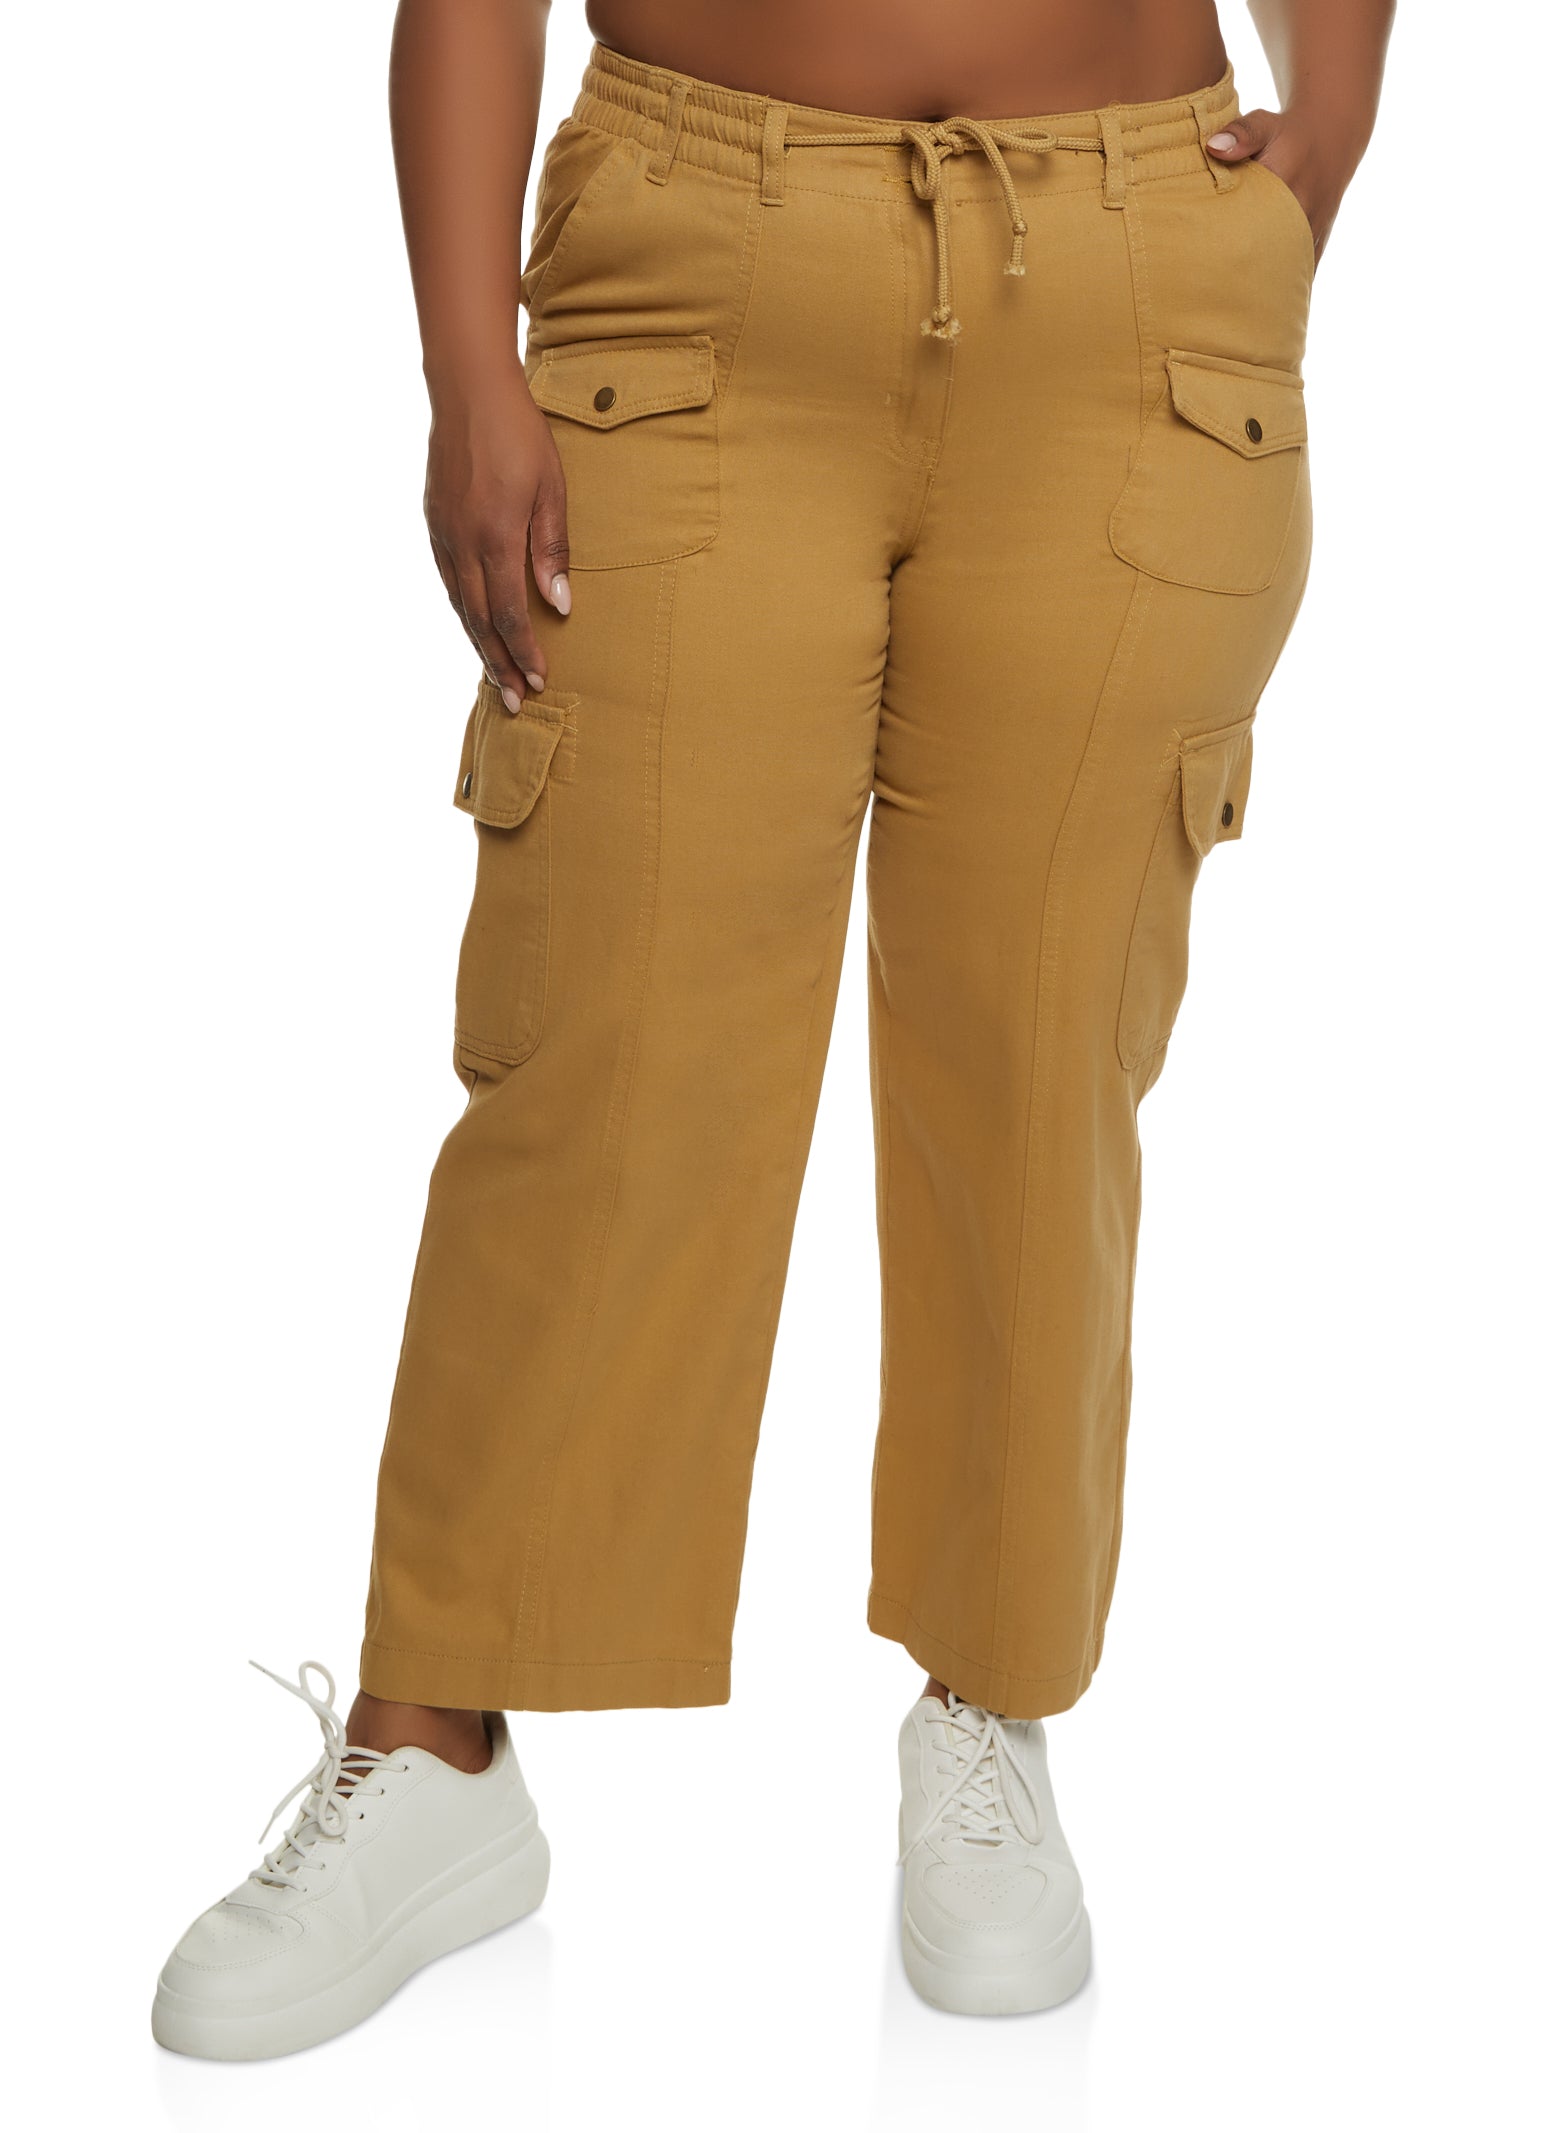 Rainbow Shops Womens Plus Size Ponte Fixed Cuff Pants, Khaki, Size